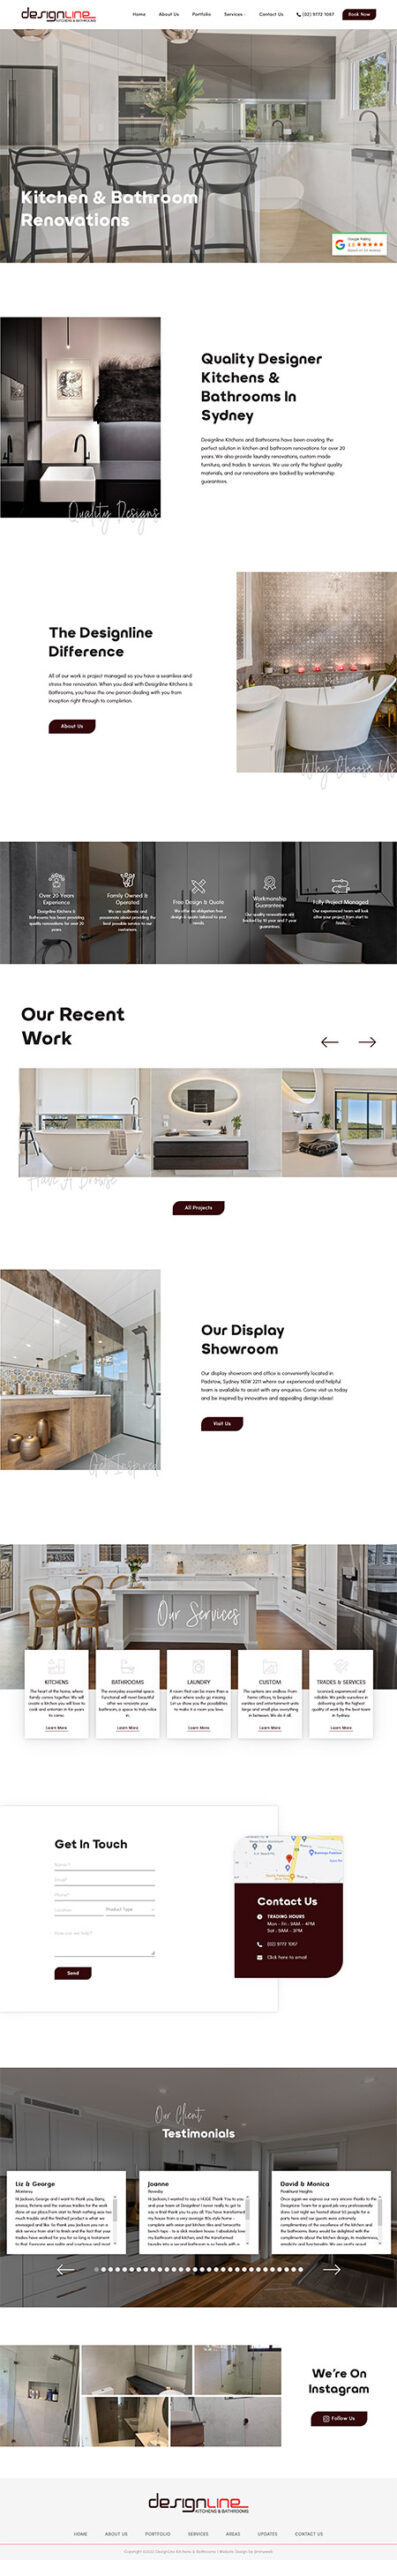 Designline Kitchens and Bathrooms - Web Design Case Study